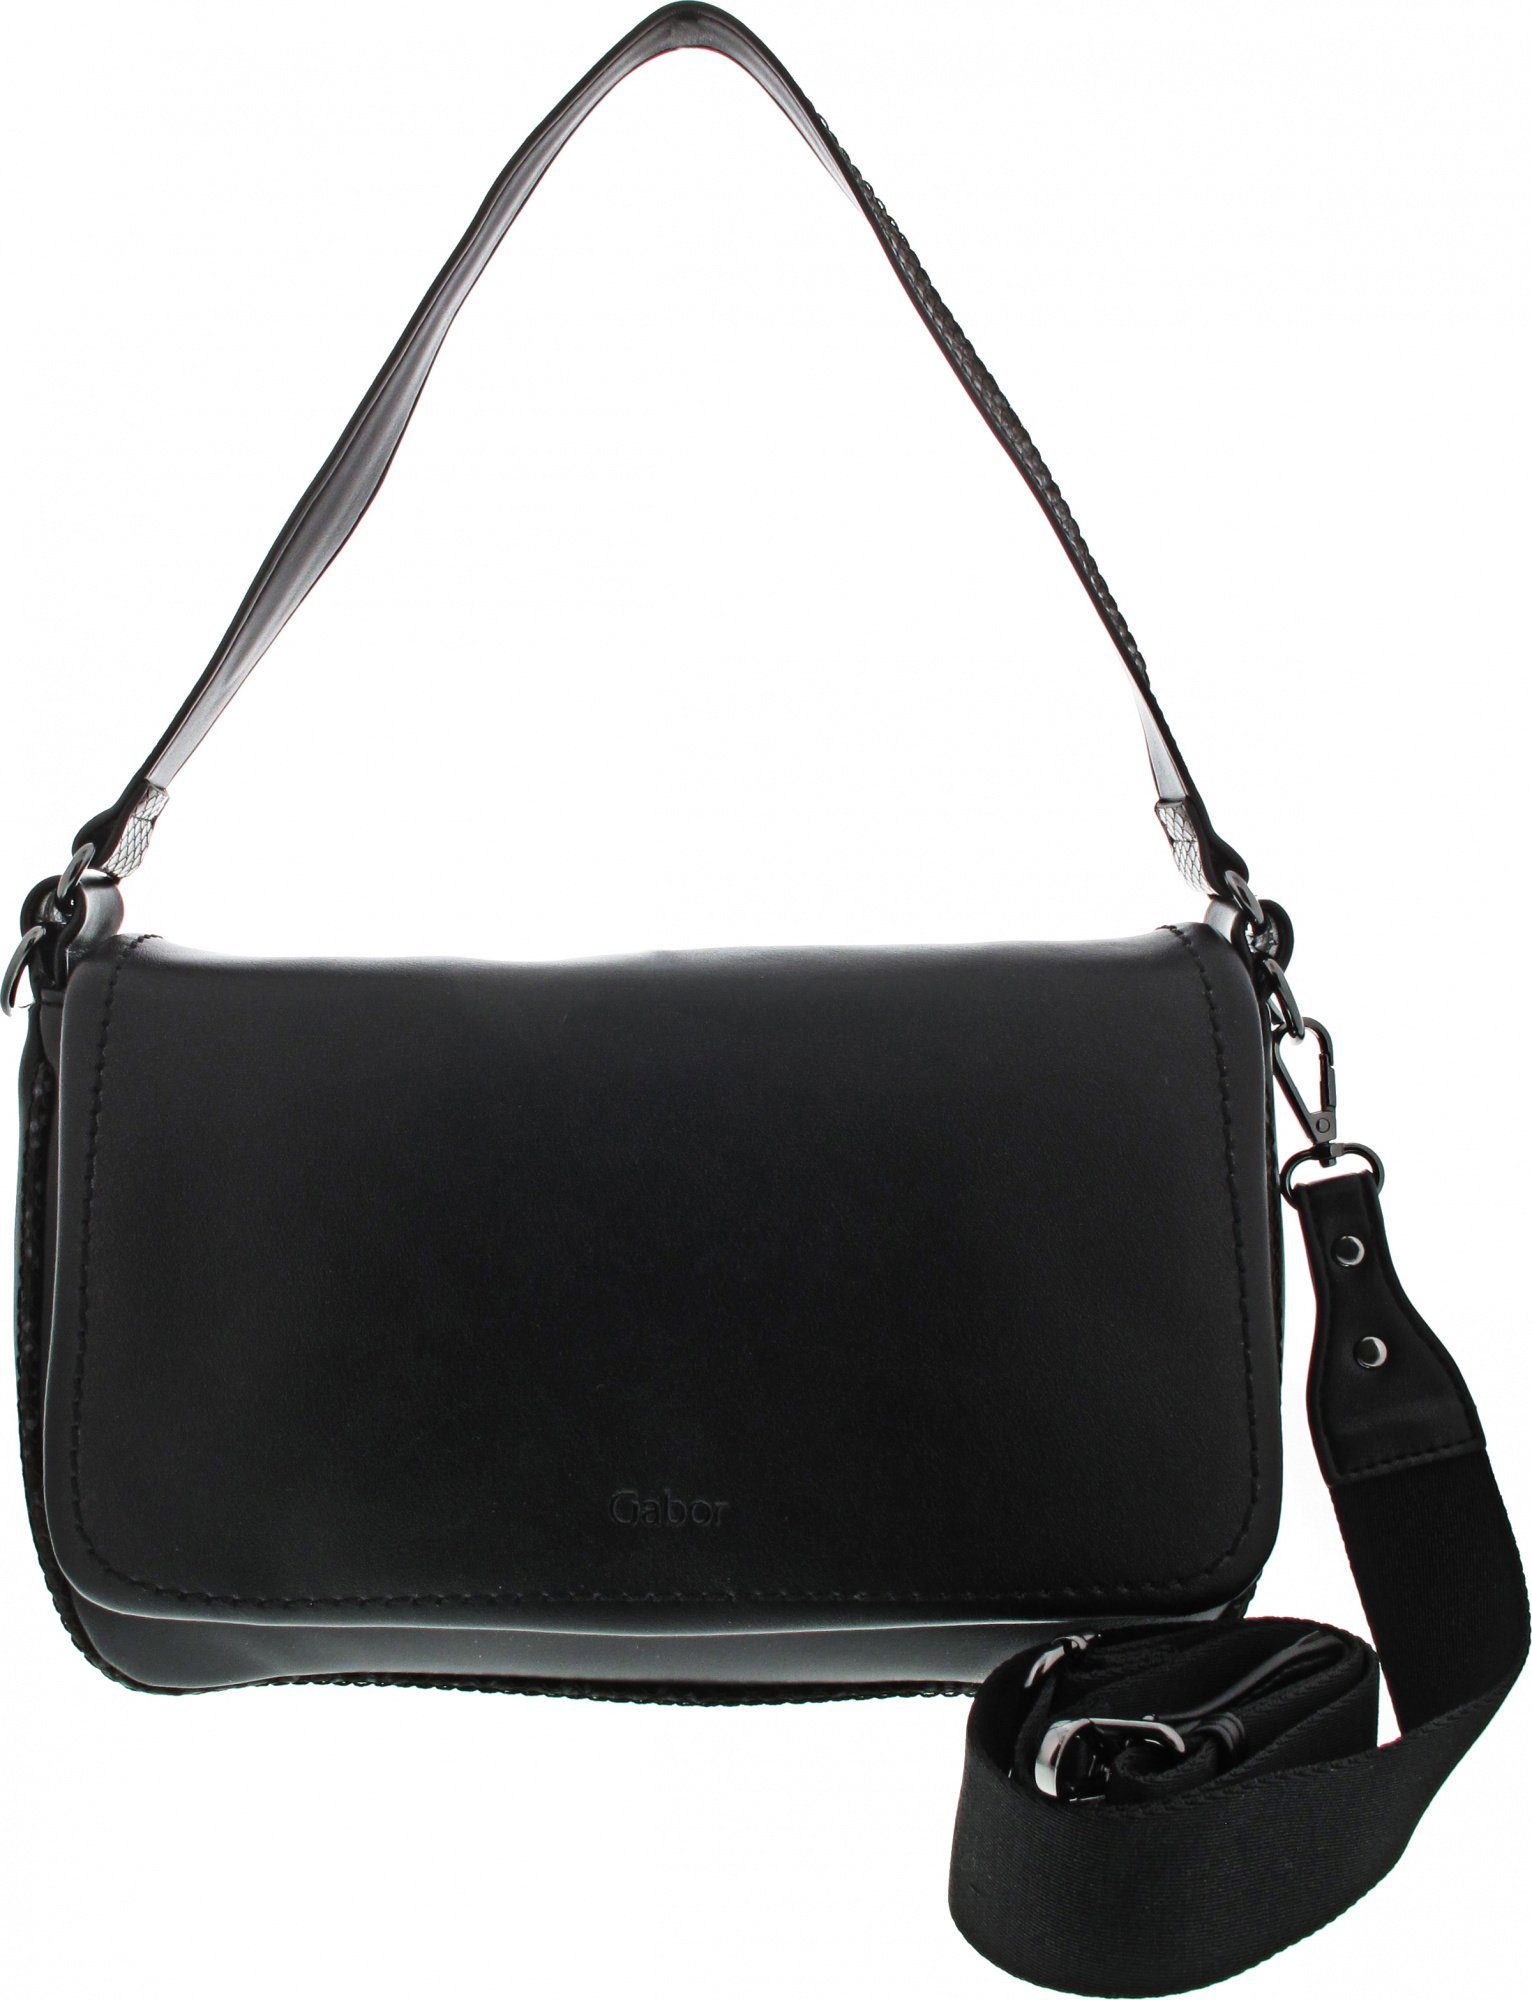 Handtasche Black Bag Gabor Sena Baguette